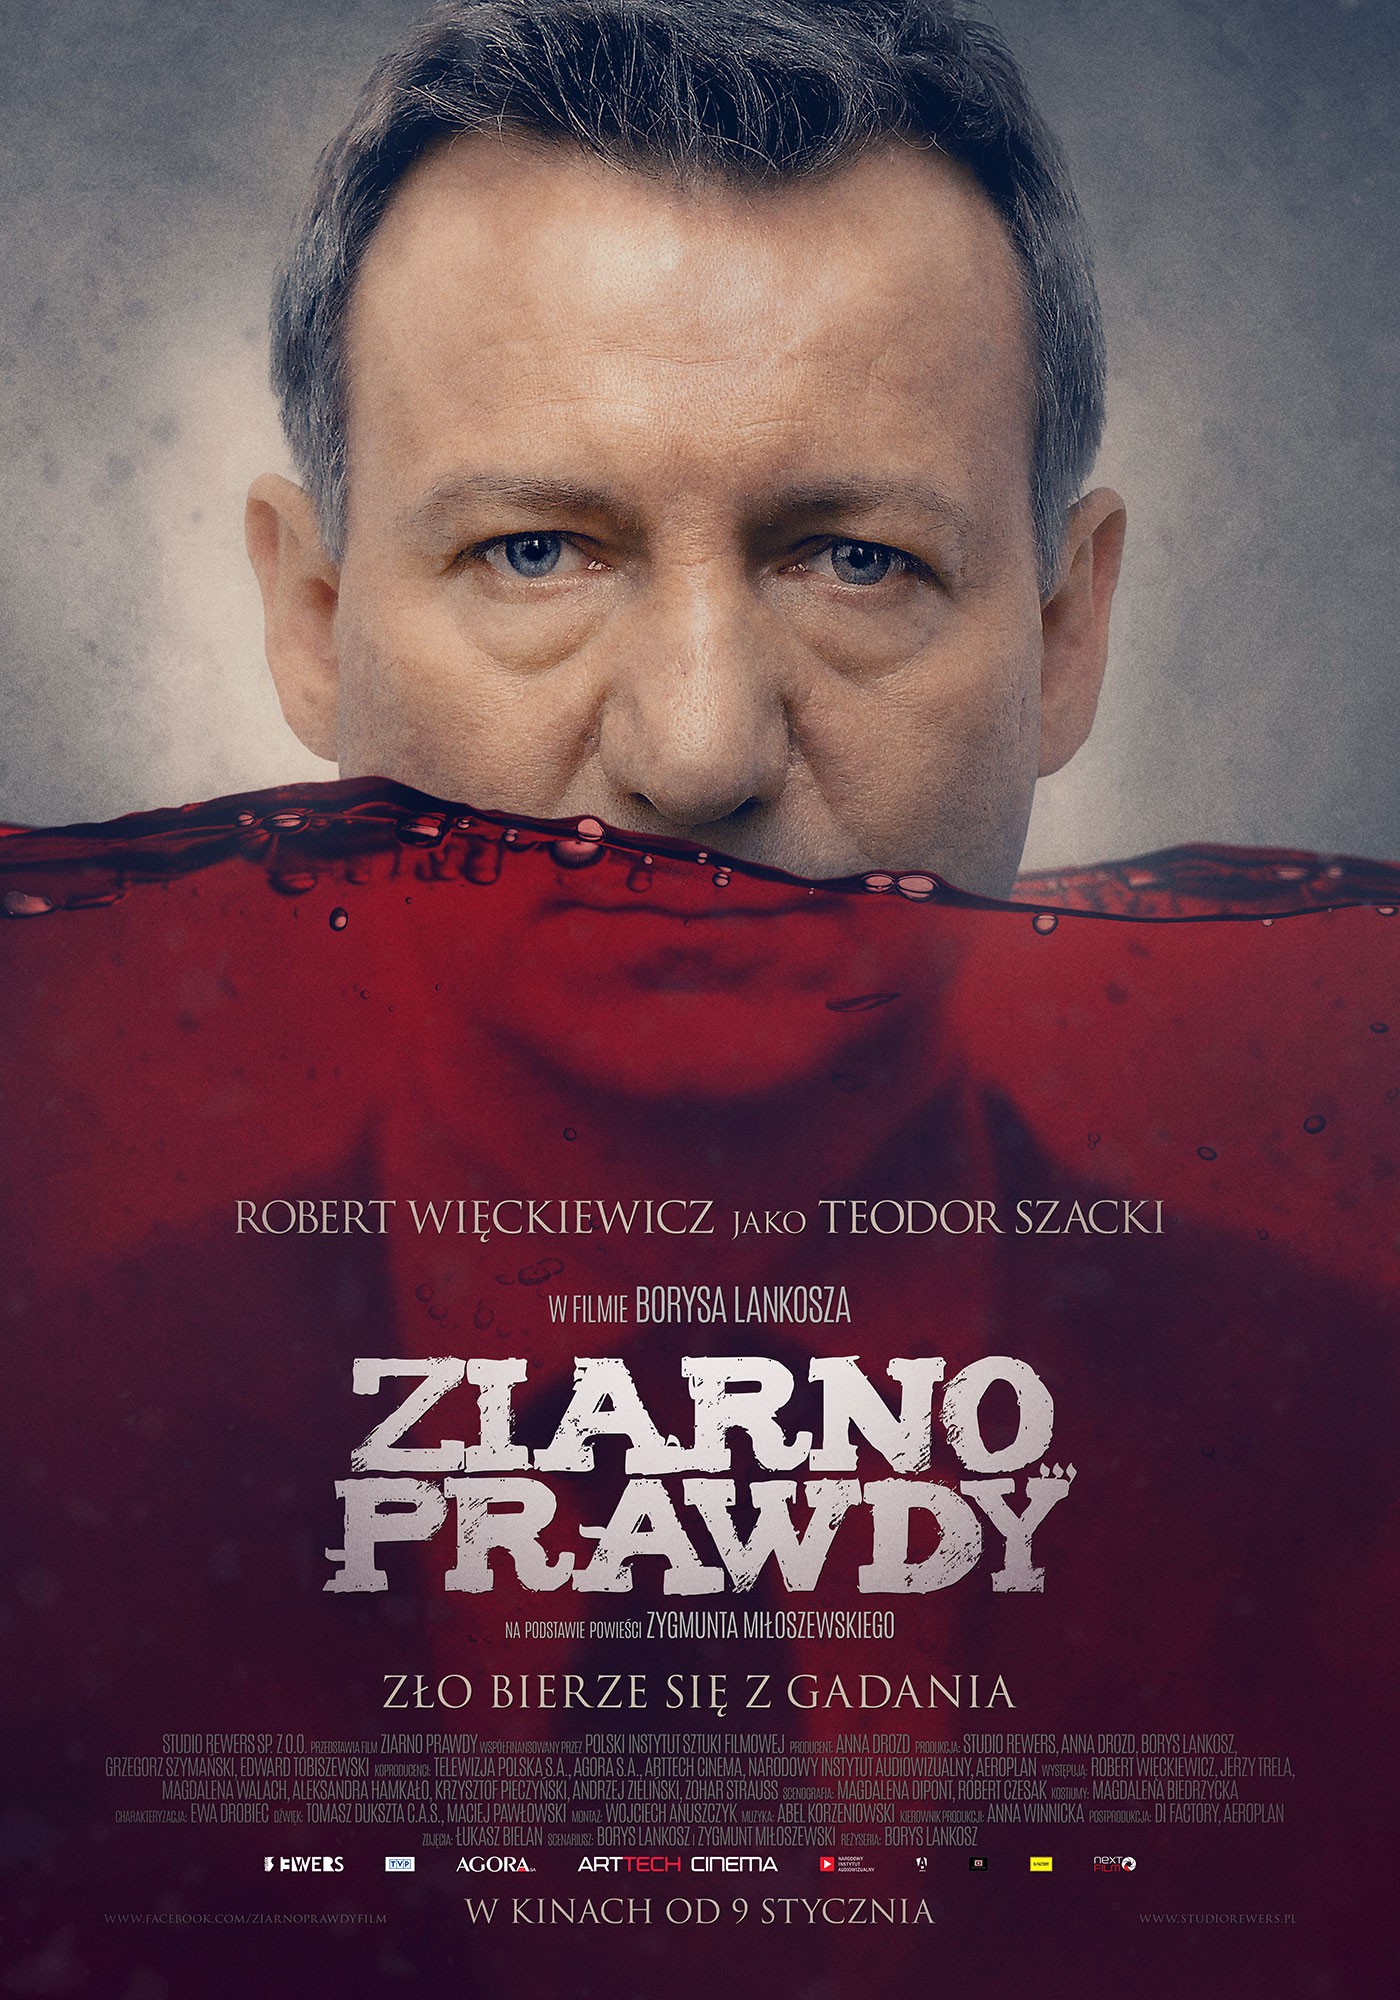 Mega Sized Movie Poster Image for Ziarno prawdy (#1 of 2)